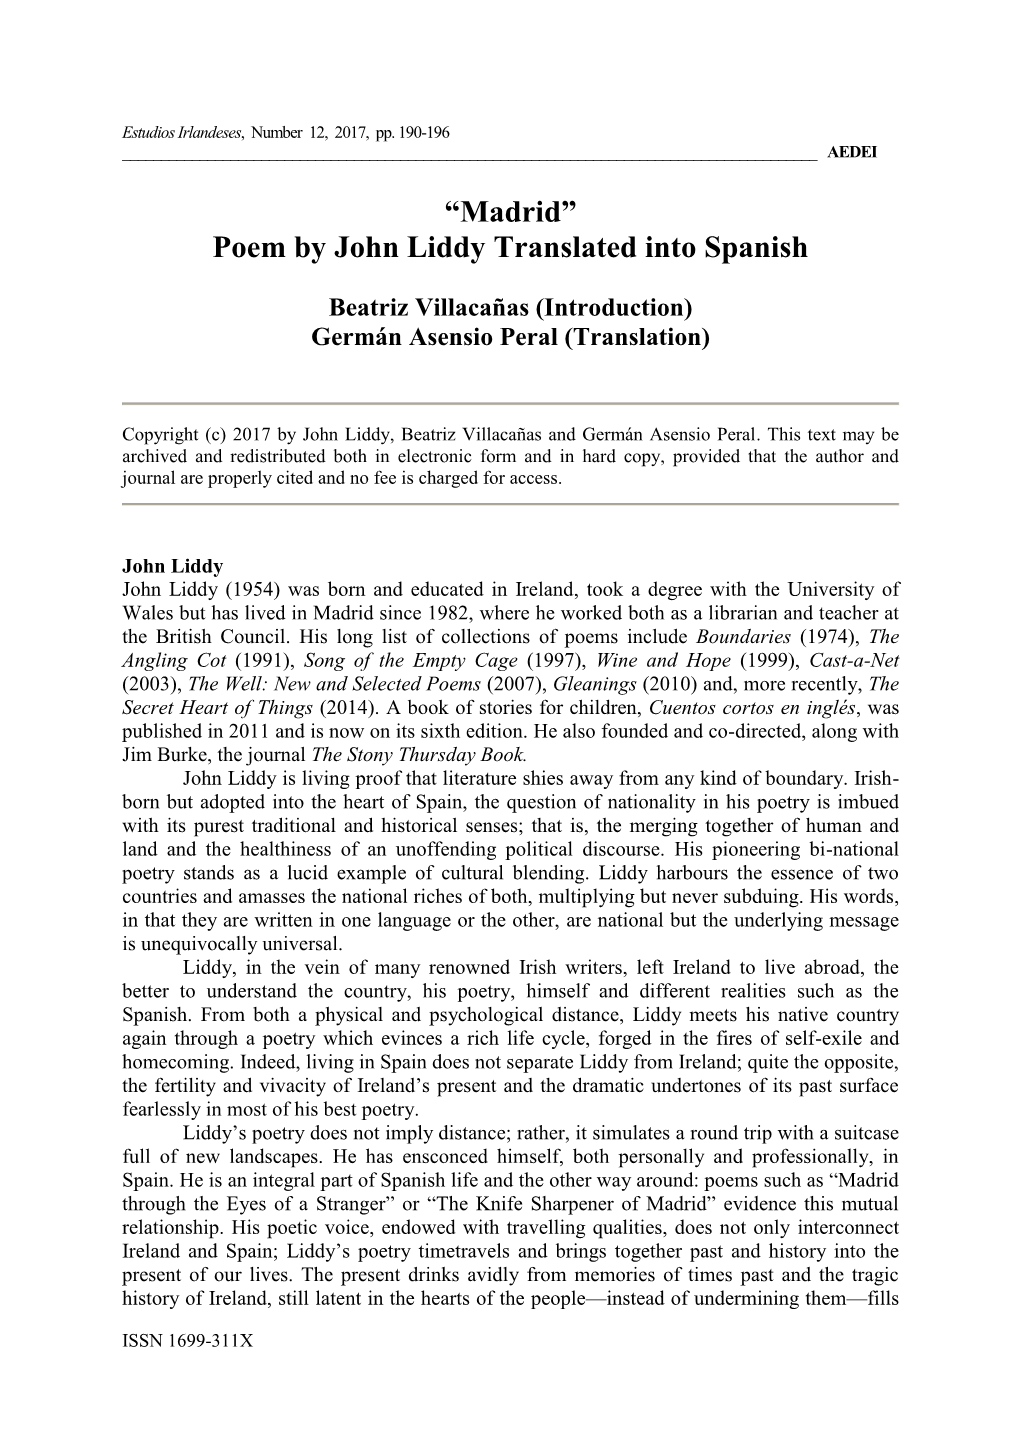 “Madrid” Poem by John Liddy Translated Into Spanish